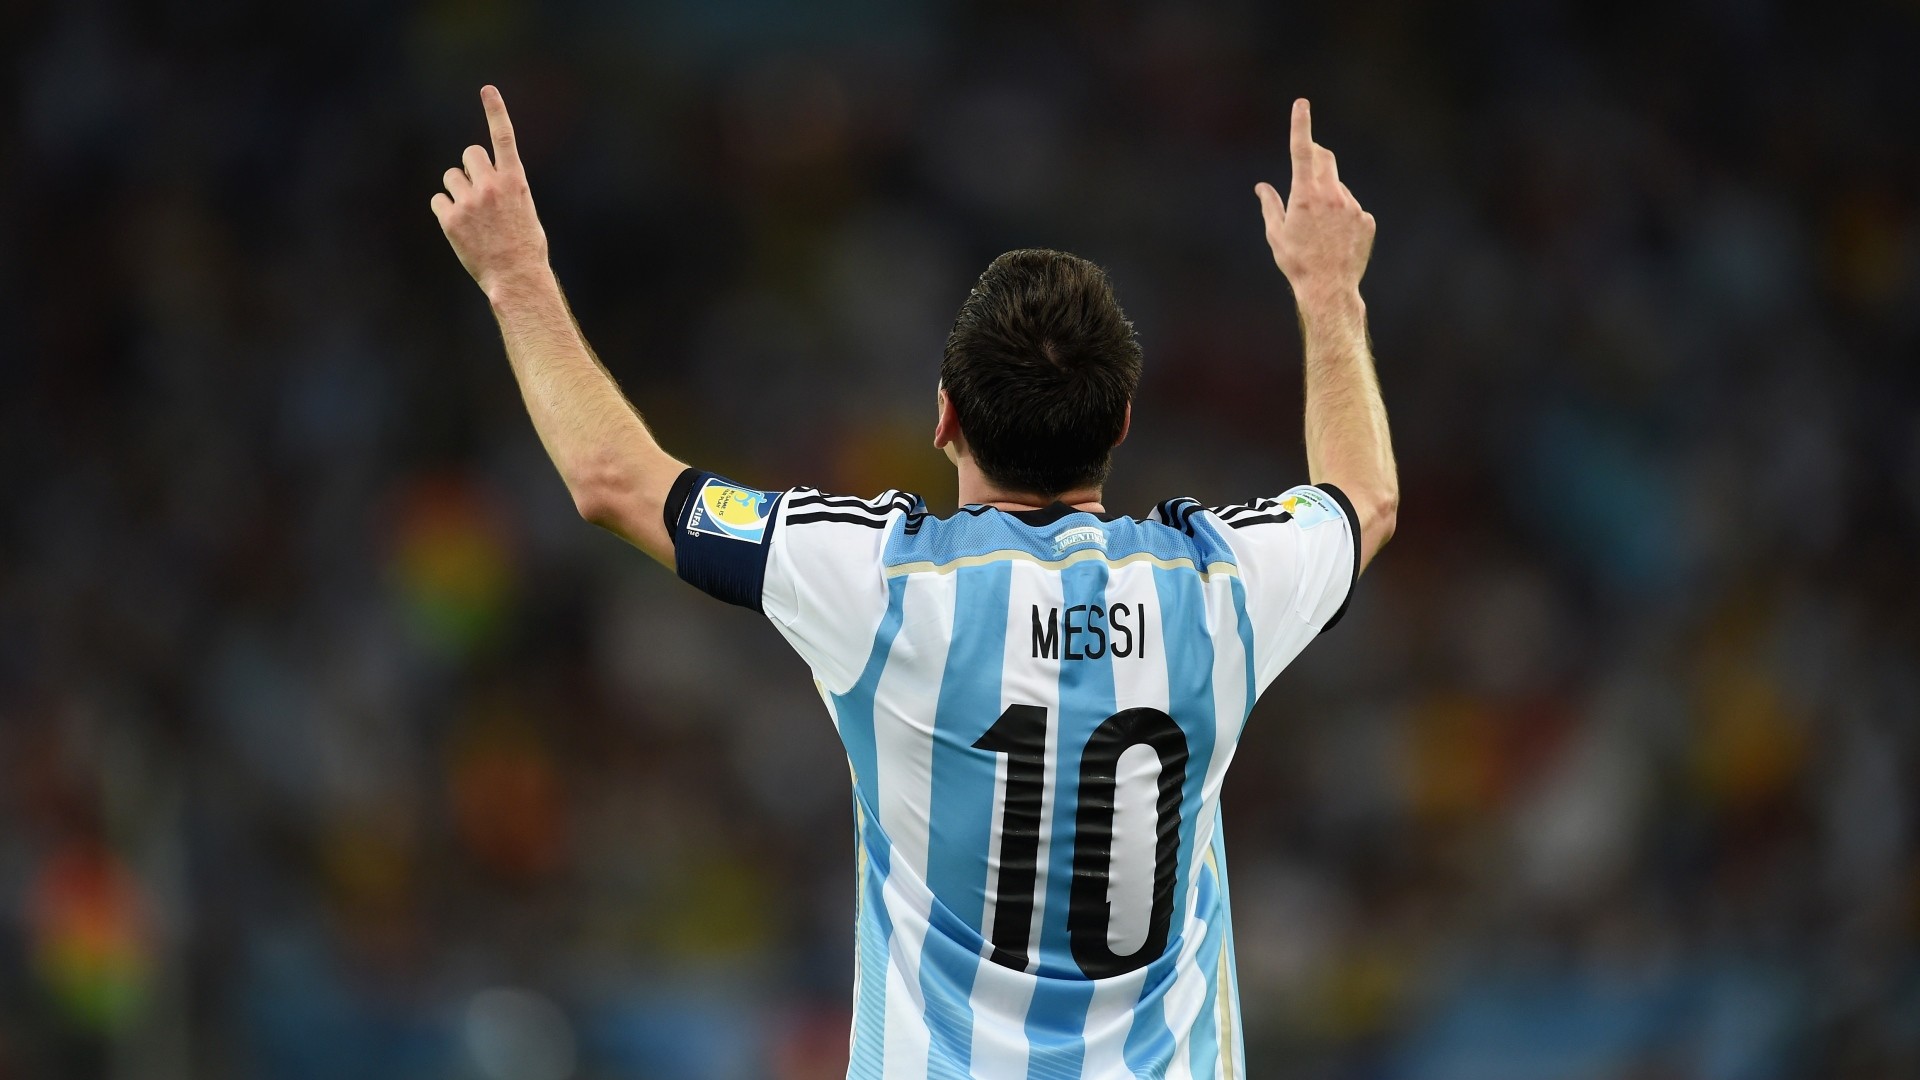 Messi HD Wallpaper 1080p Image